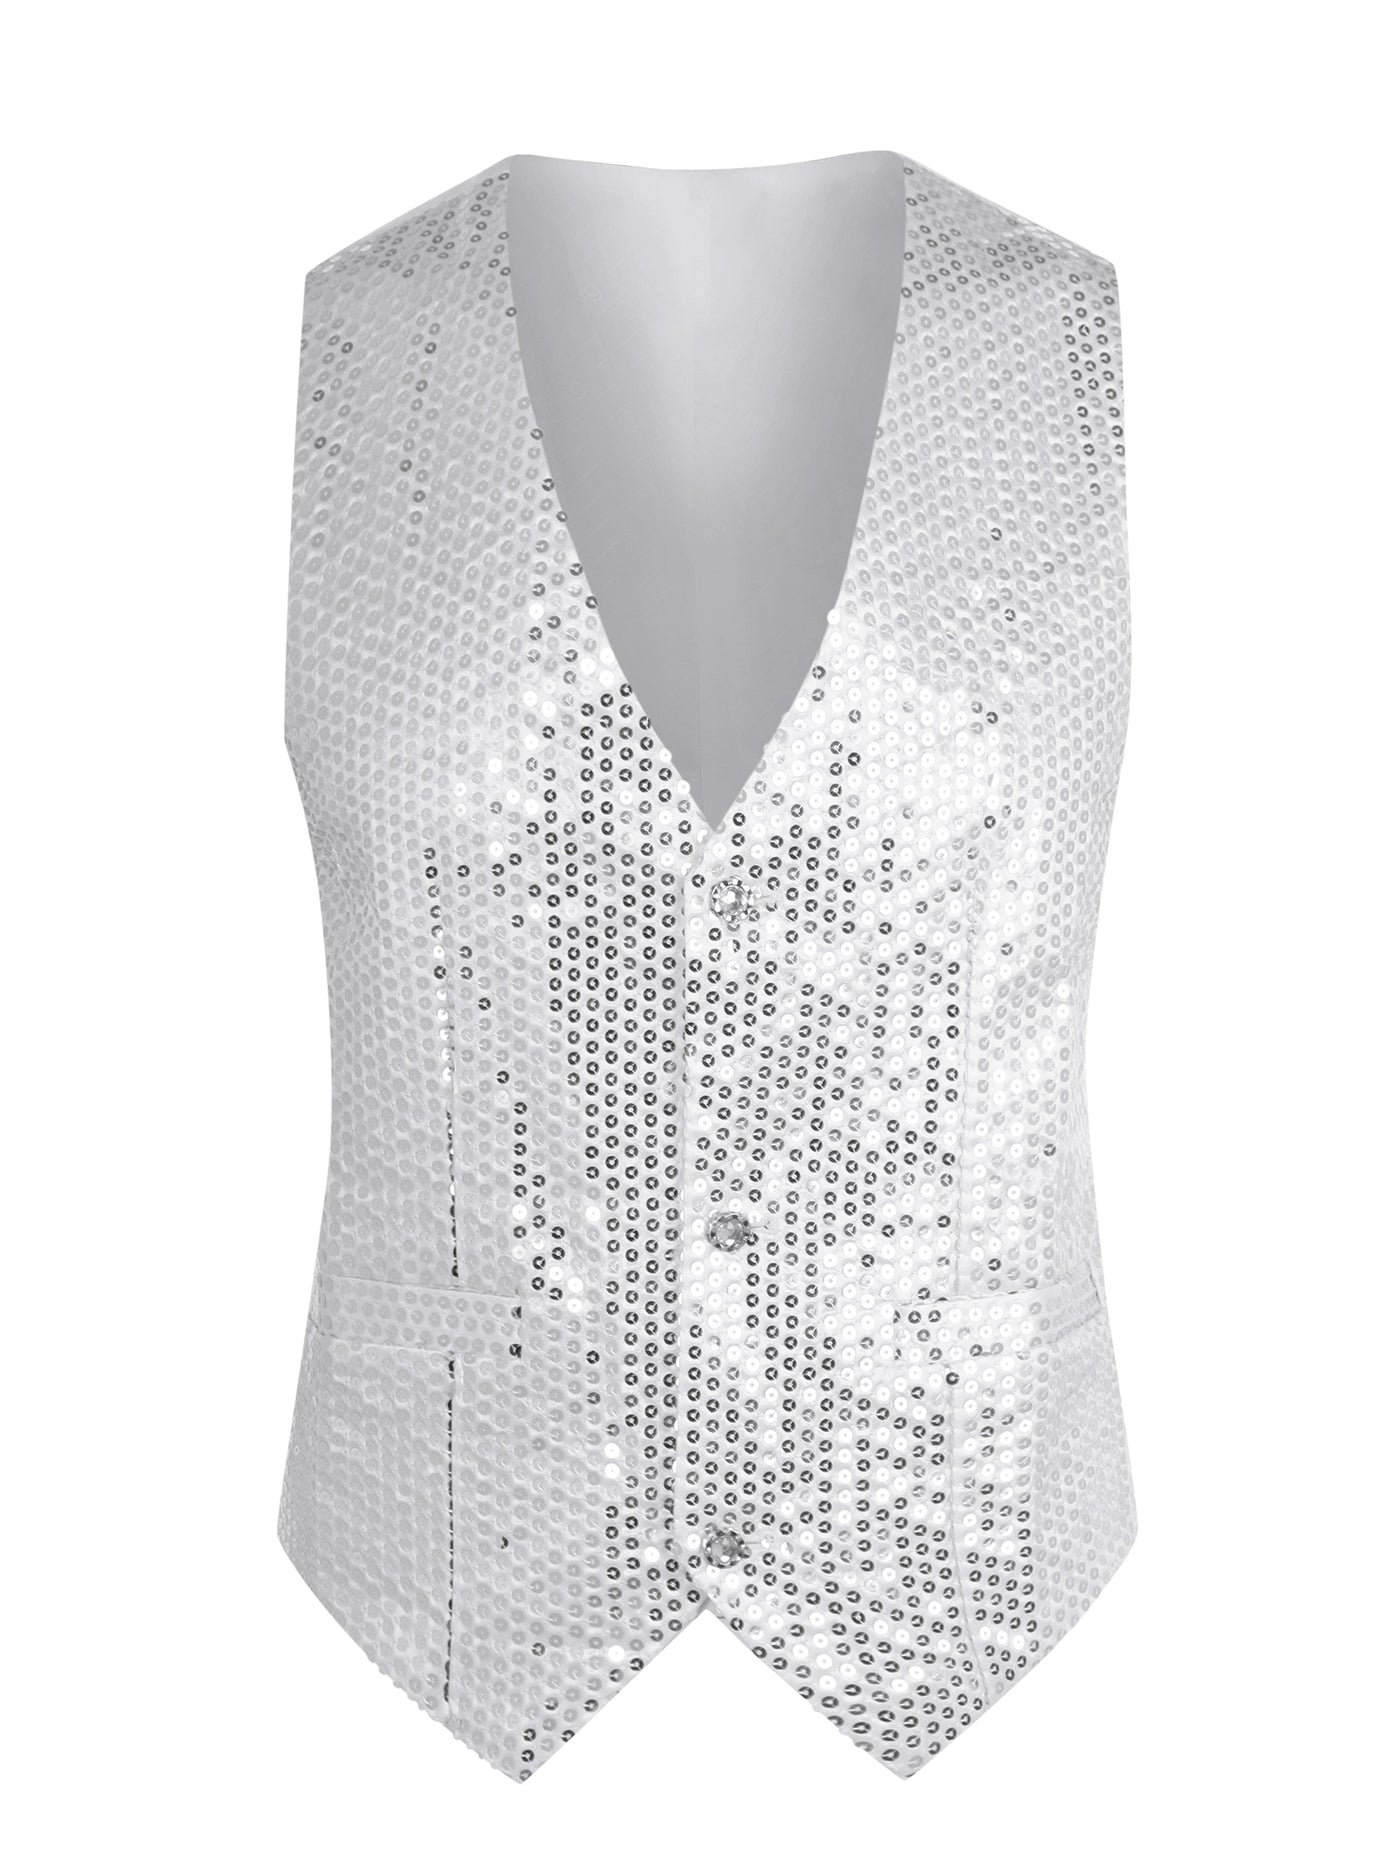 Bublédon Shiny Sequin Vest for Men's V-Neck Party Sleeveless Suit Waistcoat